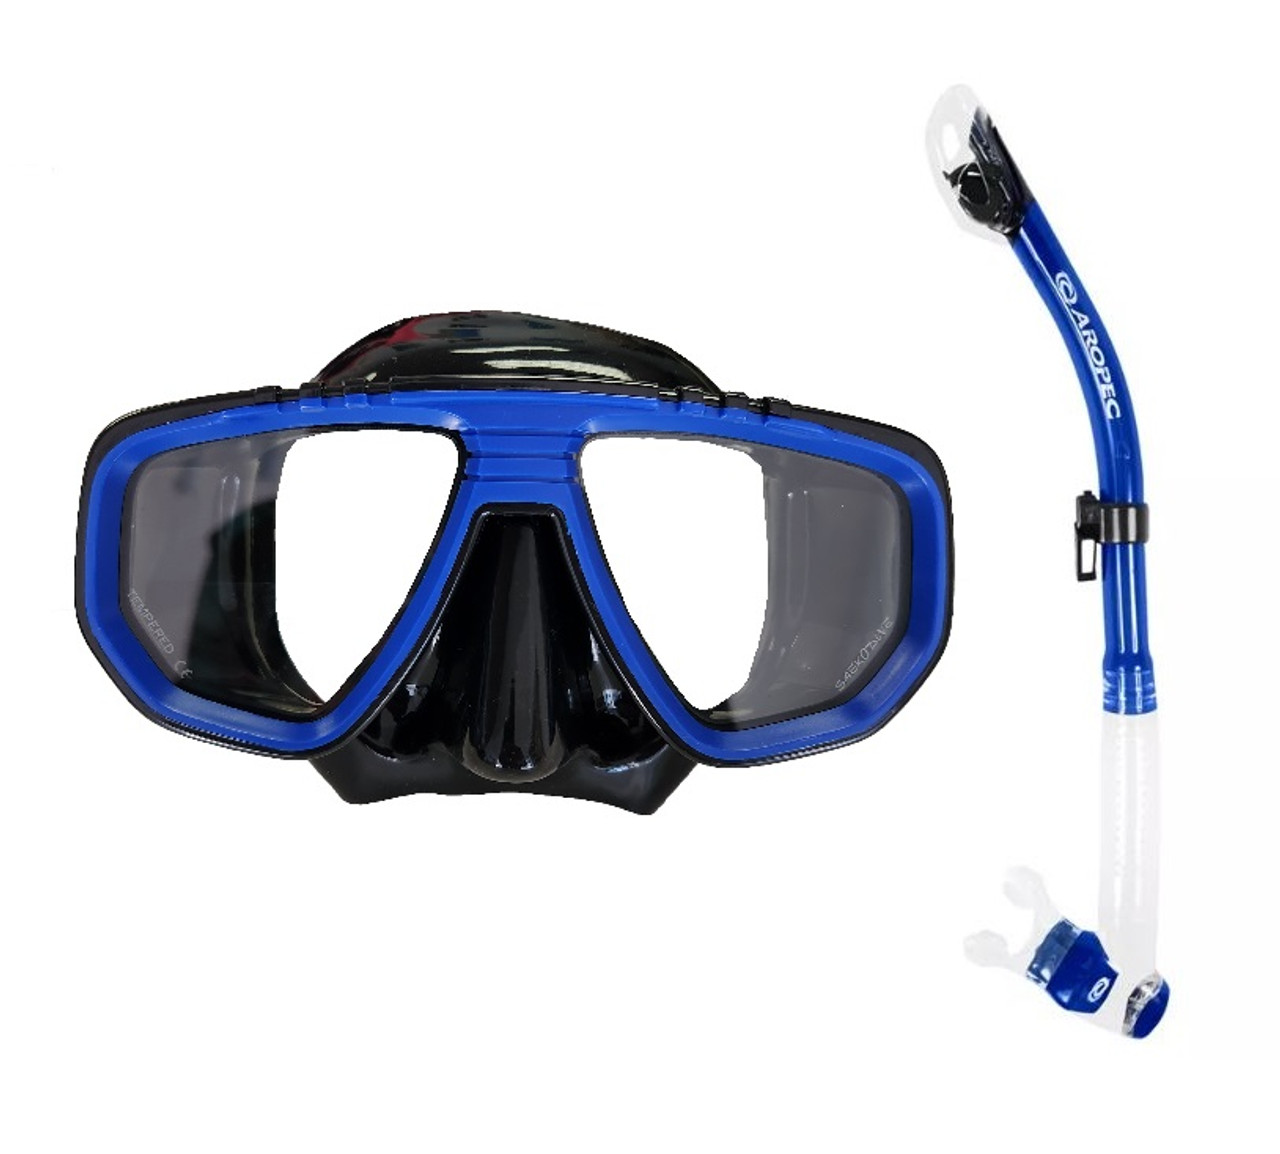 Saekodive Moray Mask & Energy Dry Snorkel Set (with Pre-Made Optical Lenses)